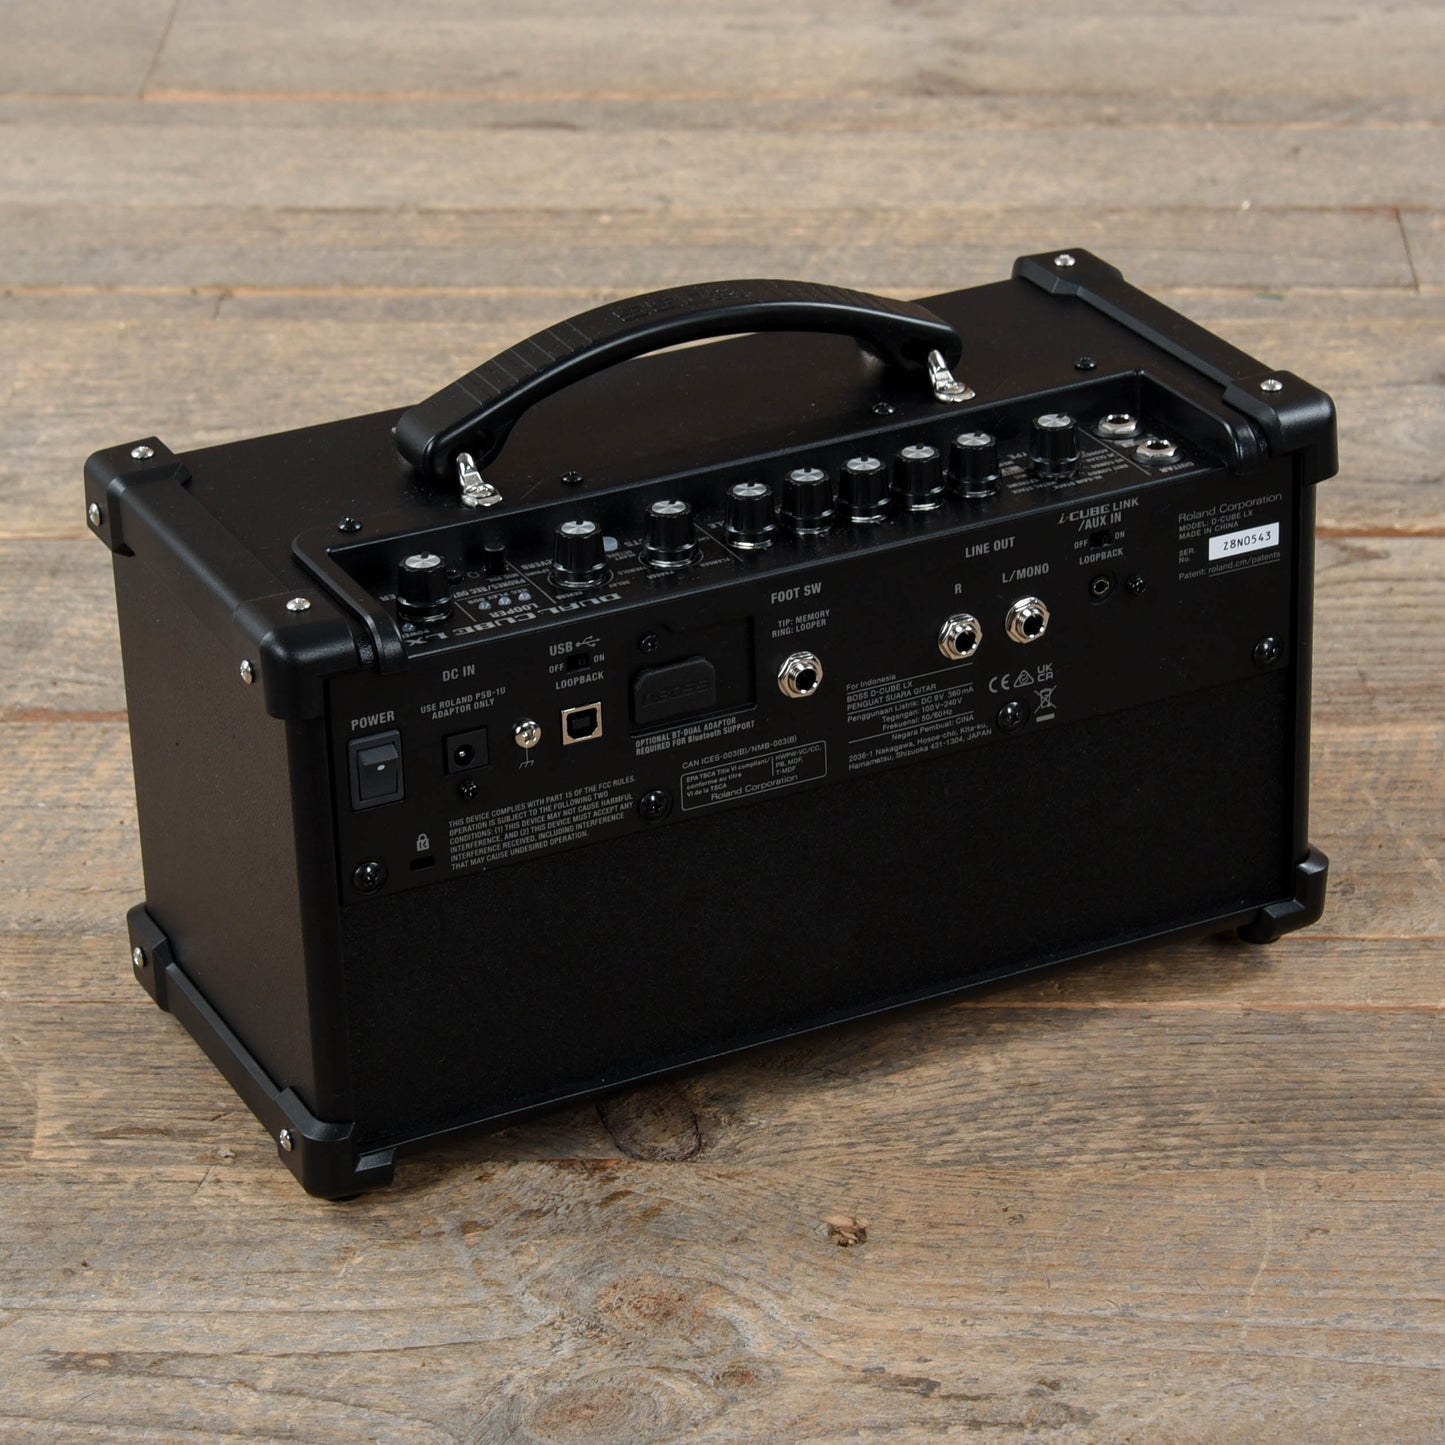 Boss Dual Cube LX Guitar Amplifier Amps / Guitar Combos